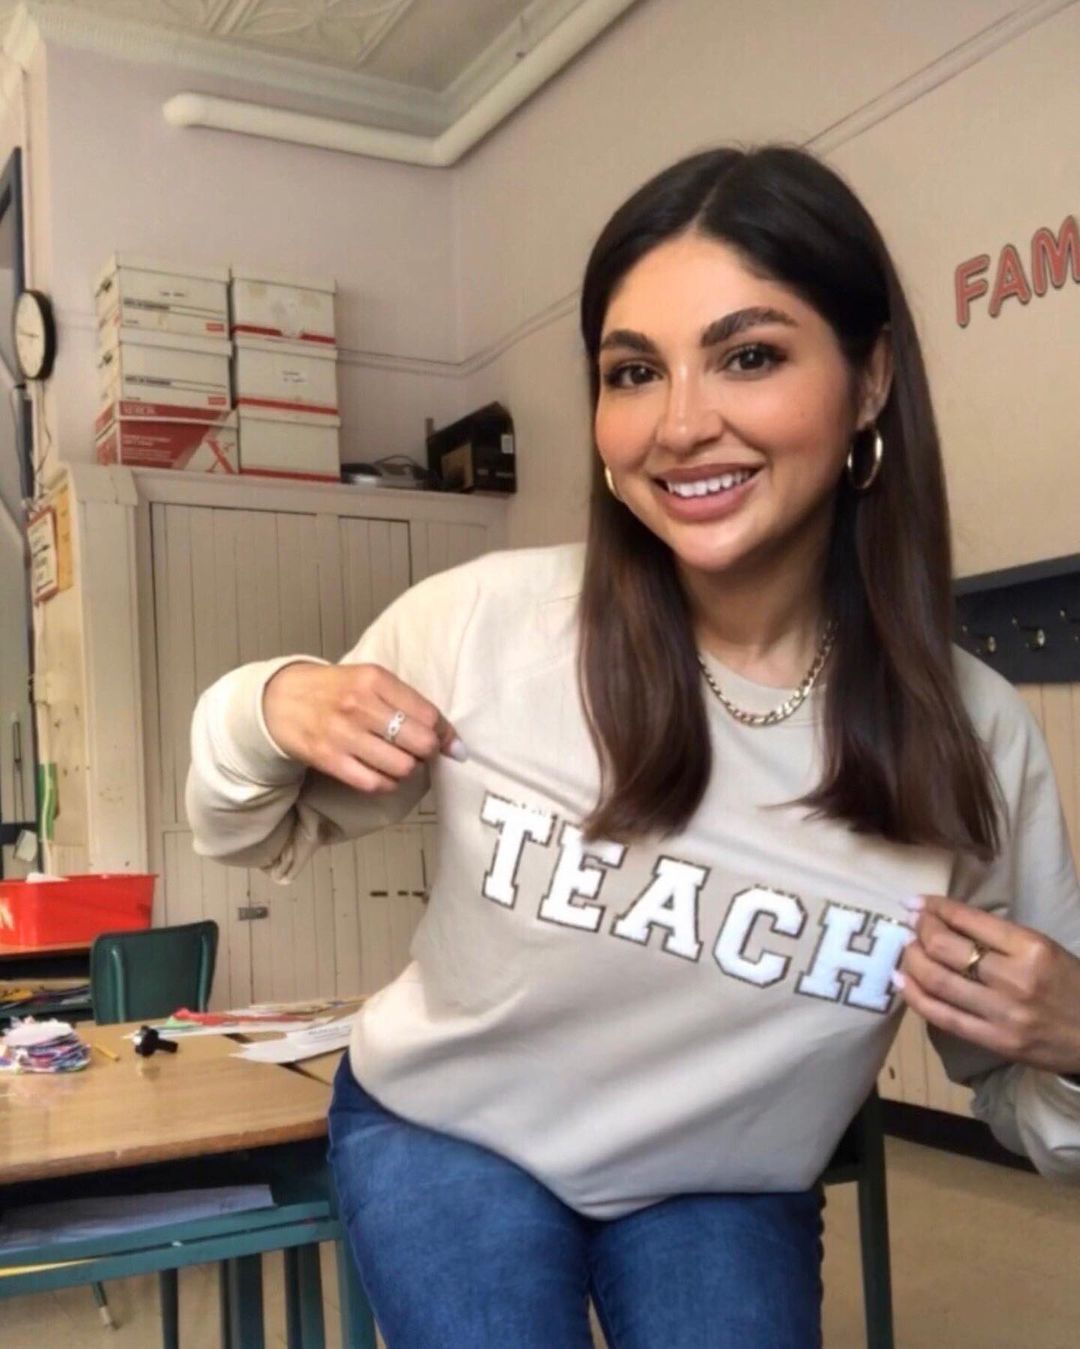 teacher Stephanie wearing an "I teach" shirt.